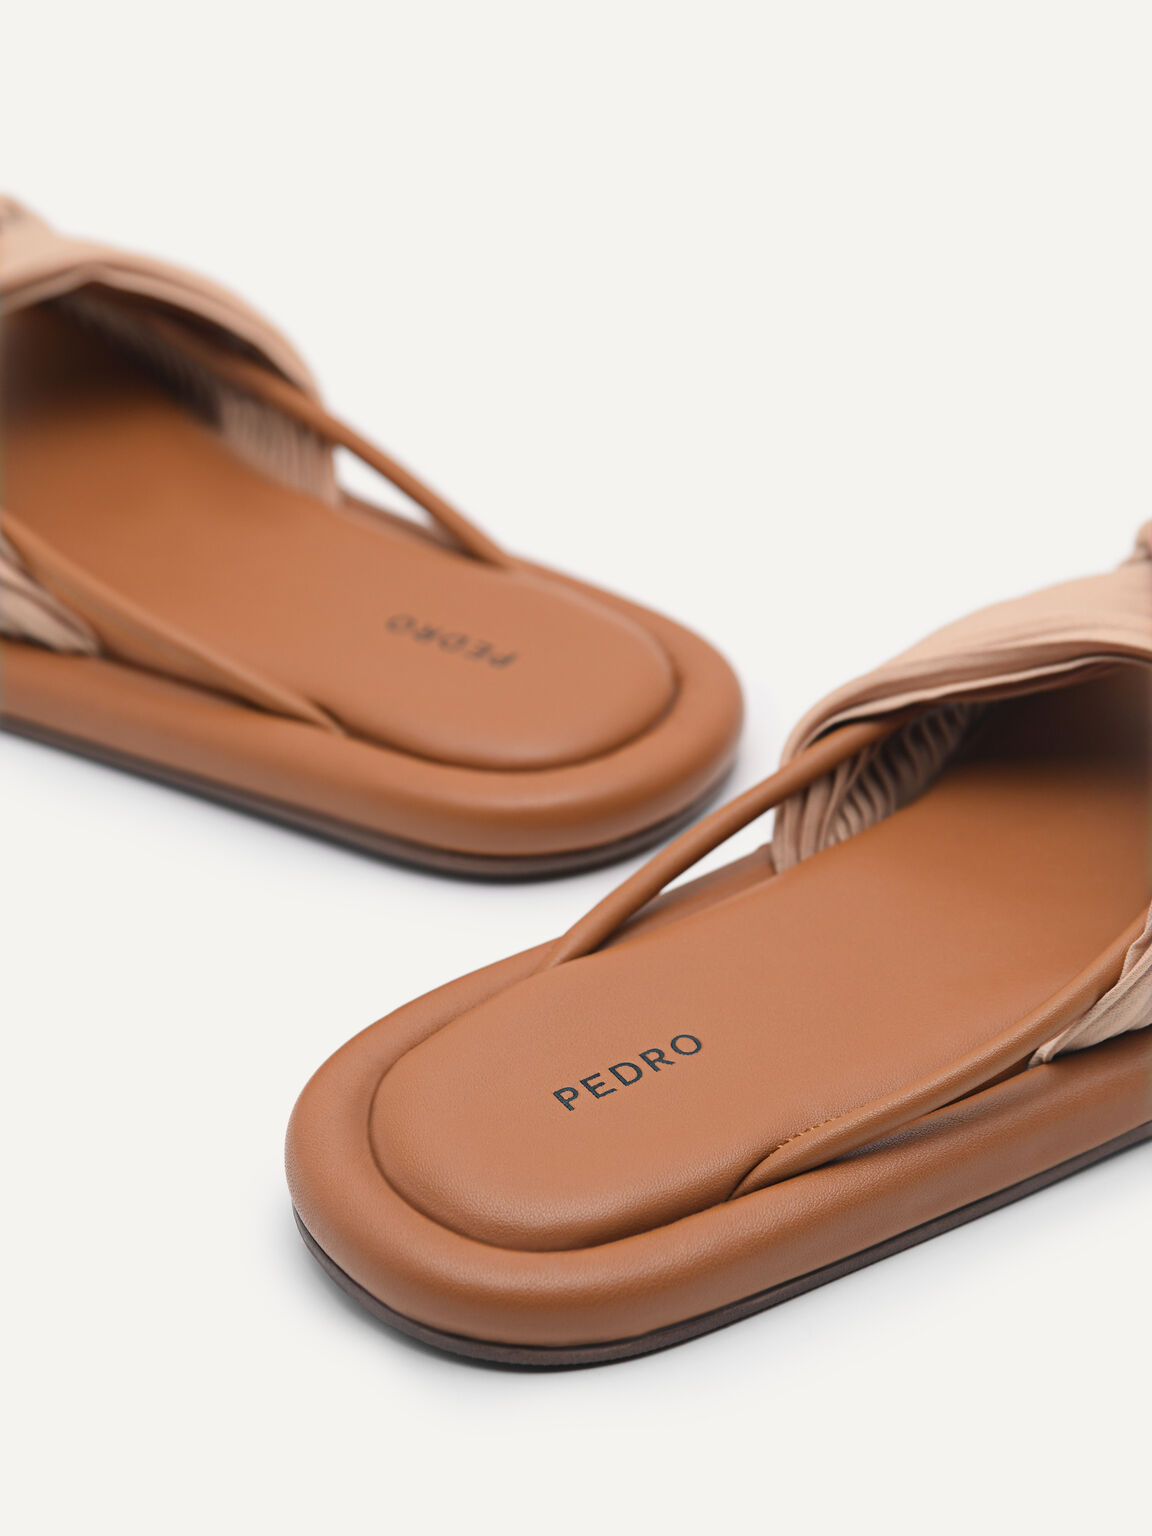 rePEDRO Pleated Sandals, Nude